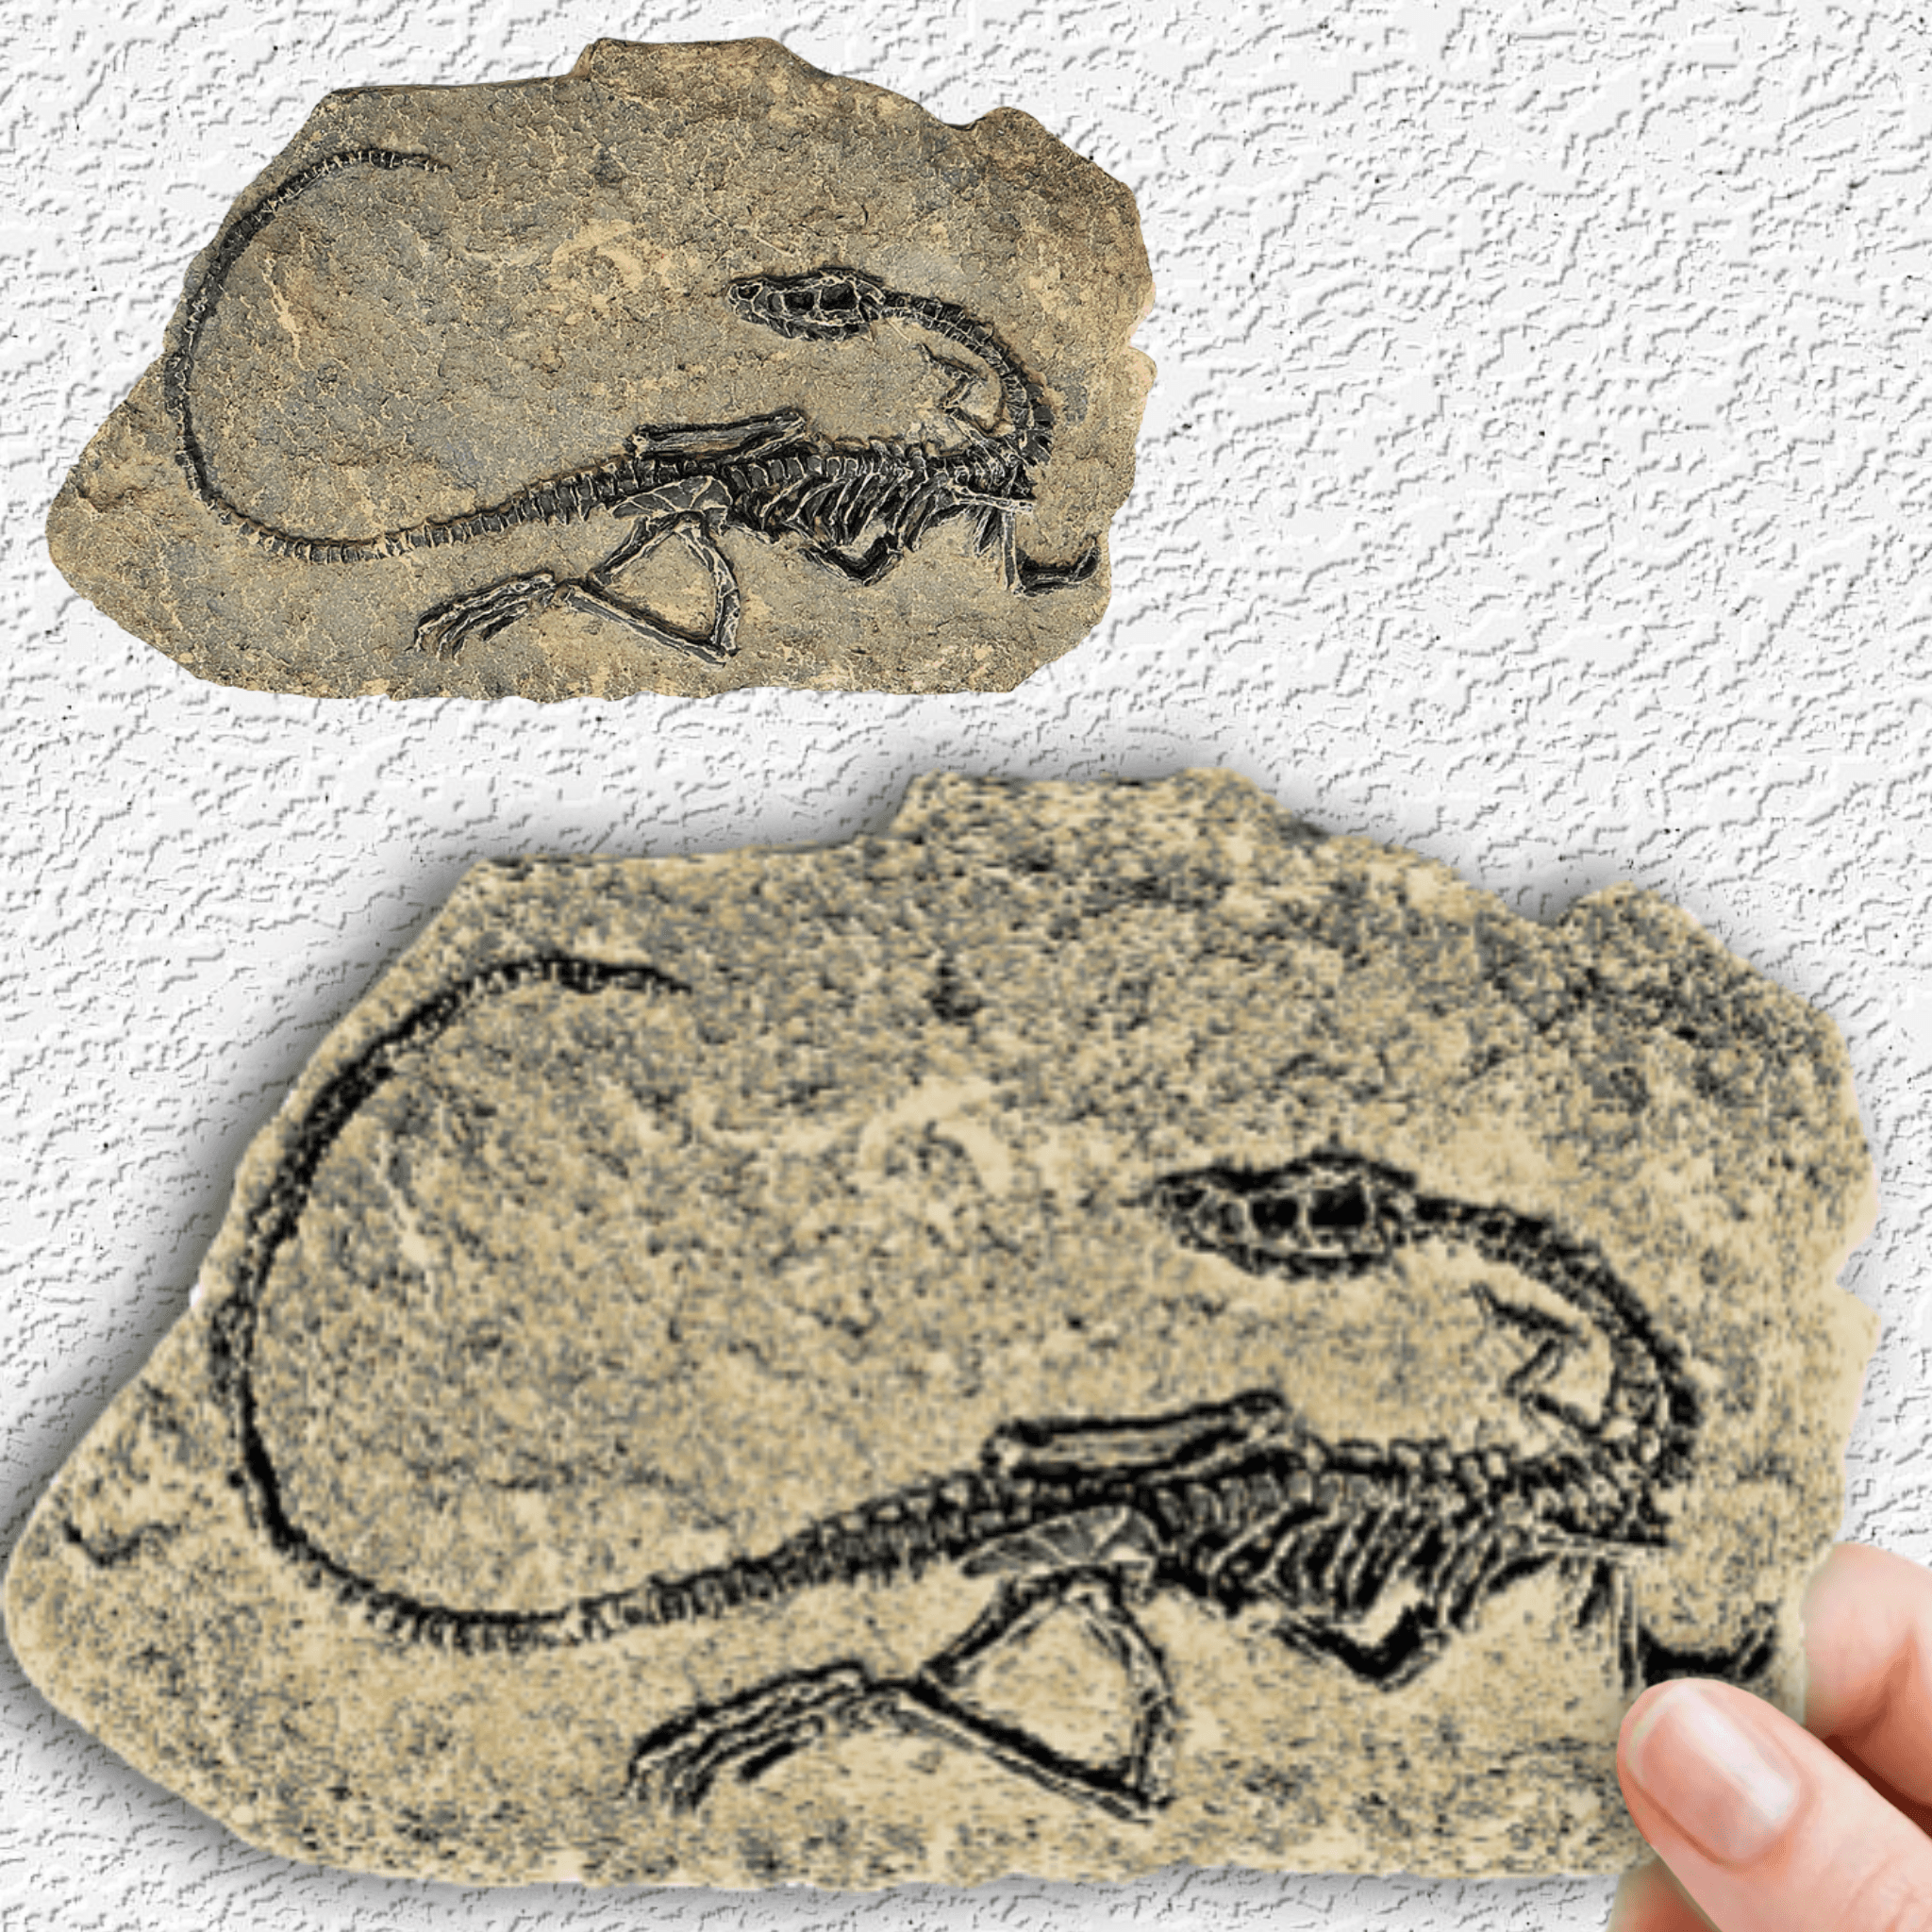 keichousaurus replica in matrix dinosaur fossil decoration 3d model